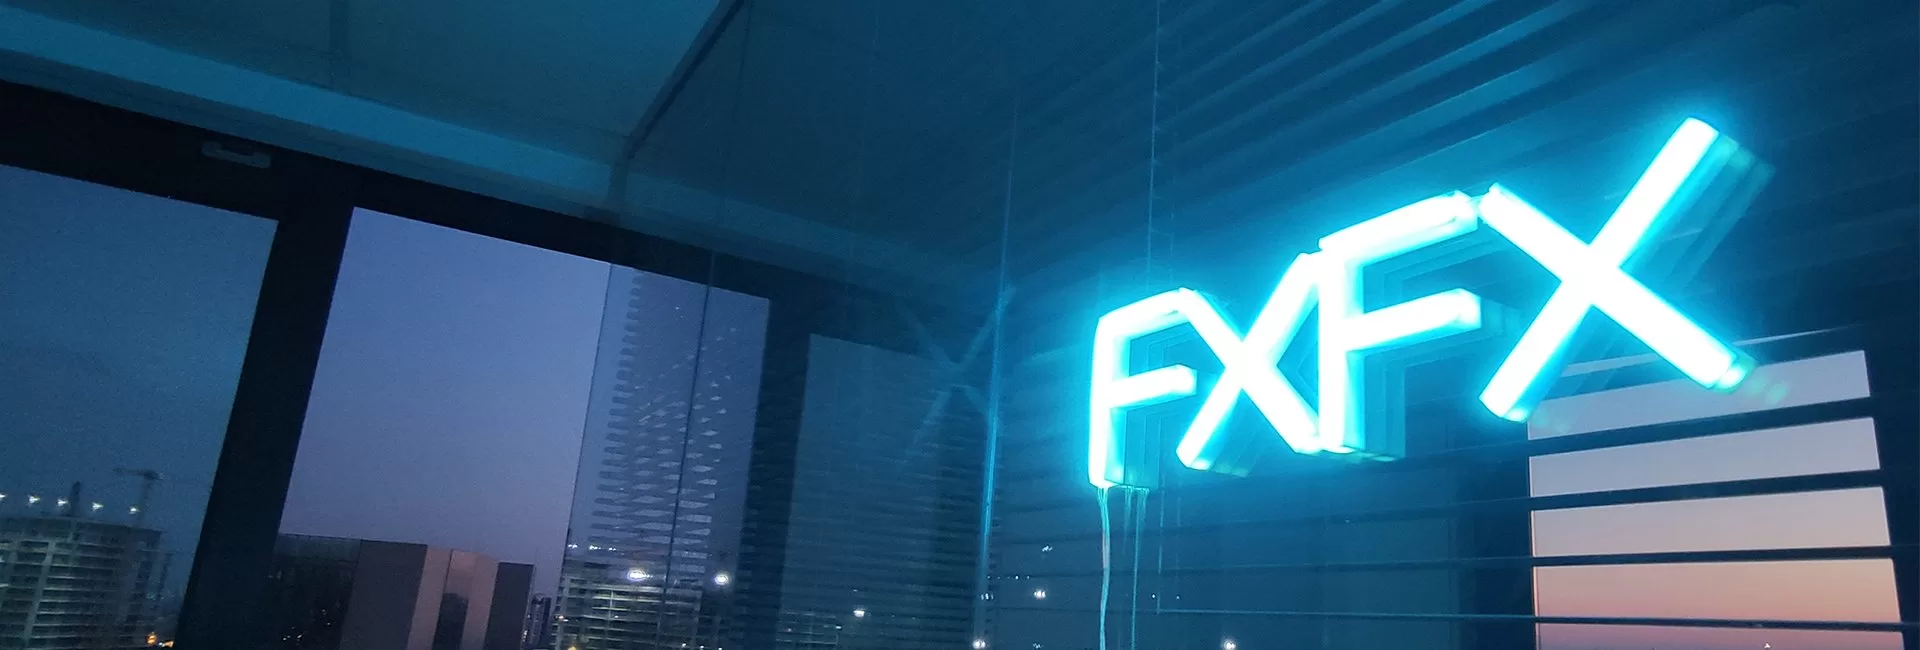 FXFX Studios header